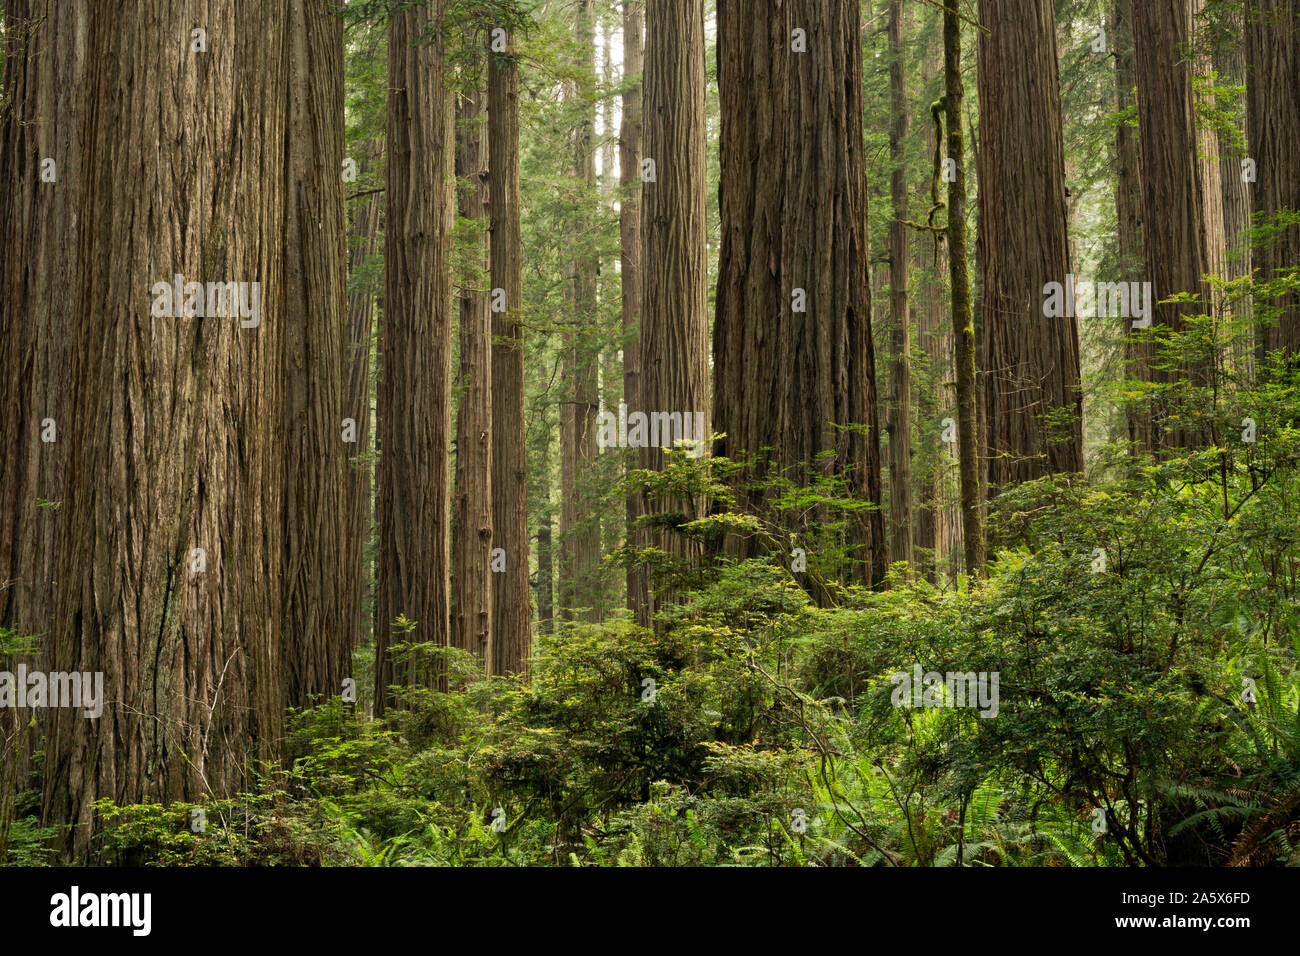 CA03764-00...CALIFORNIA - Foresta di Redwood in Jedediah Smith Redwoods State Park; parte di Redwoods nazionali e i parchi statali complesse. Foto Stock